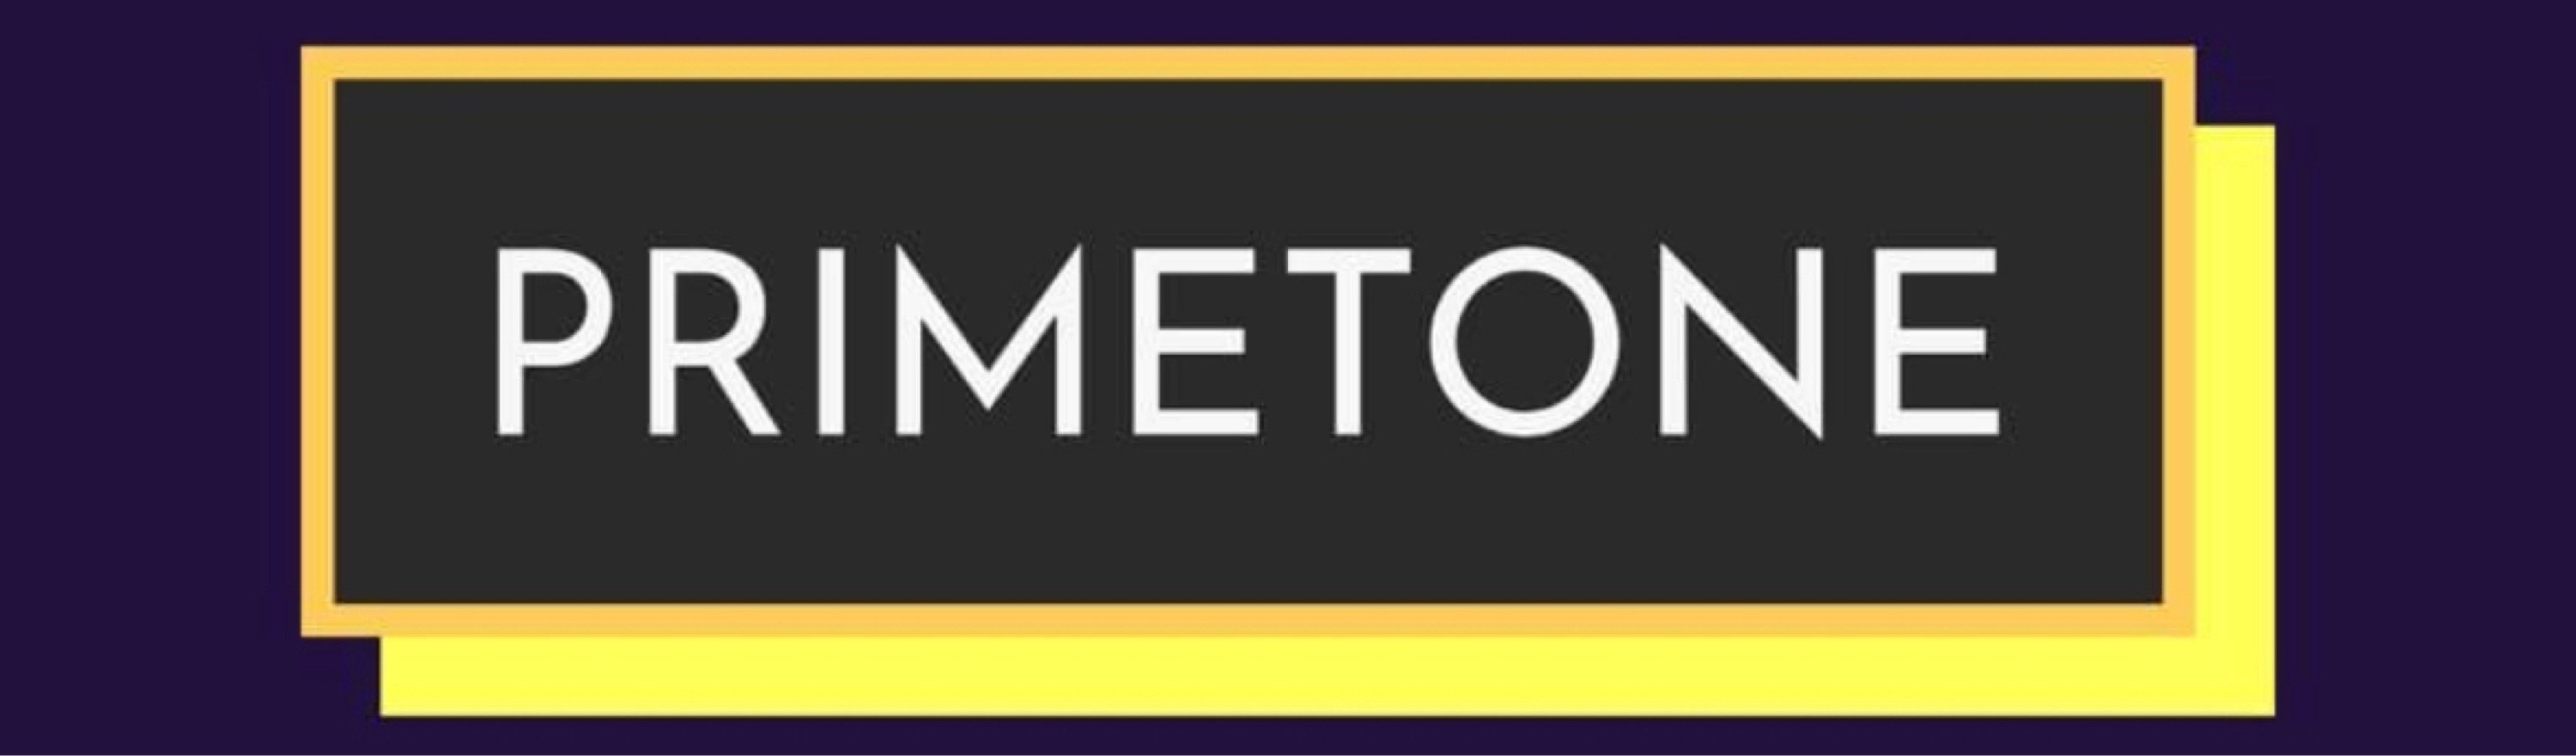 Primetone LLC Logo